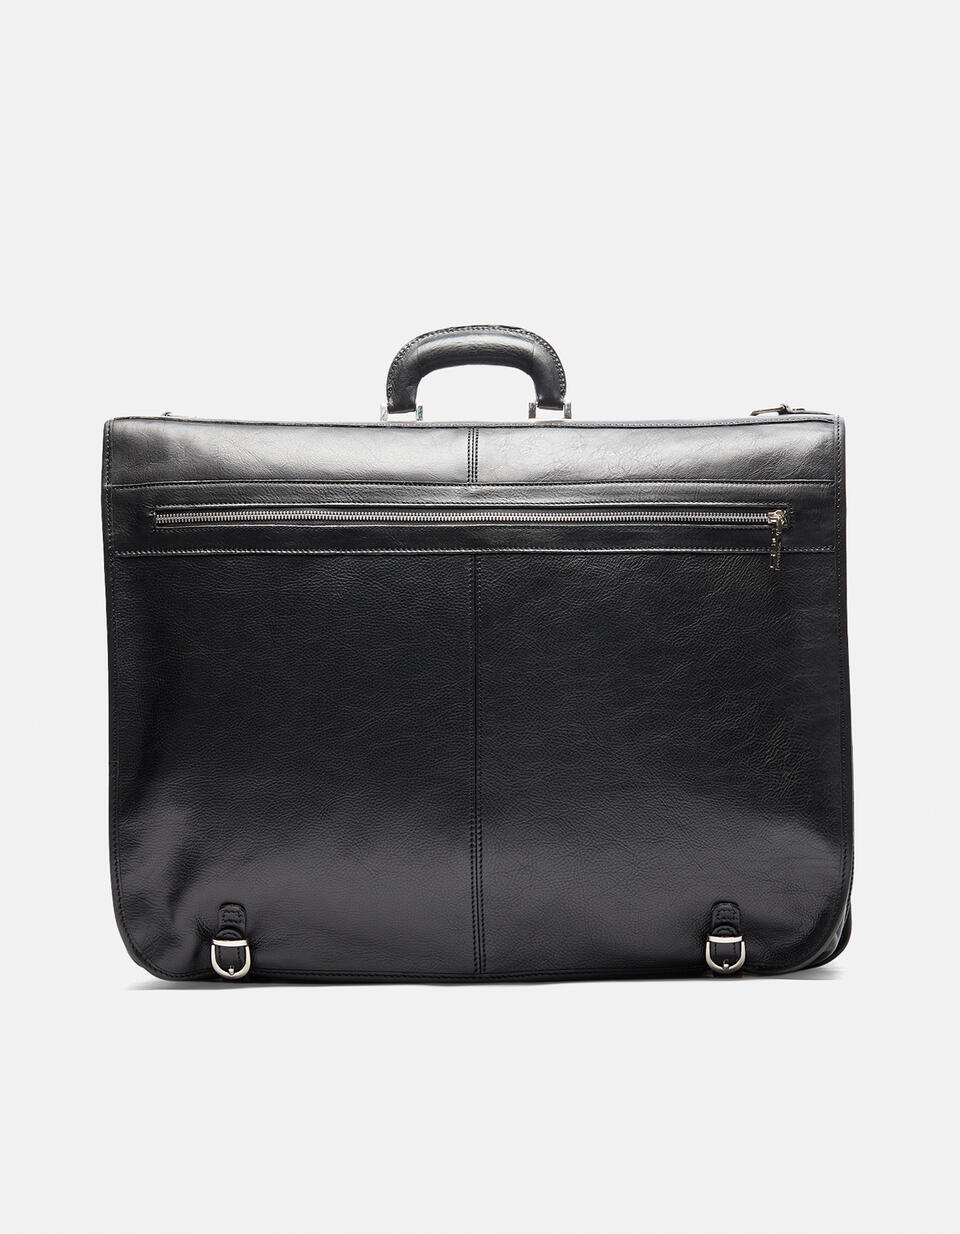 Oxford travel garment bag in vegetable tanned leather - Luggage | TRAVEL BAGS  - Luggage | TRAVEL BAGSCuoieria Fiorentina